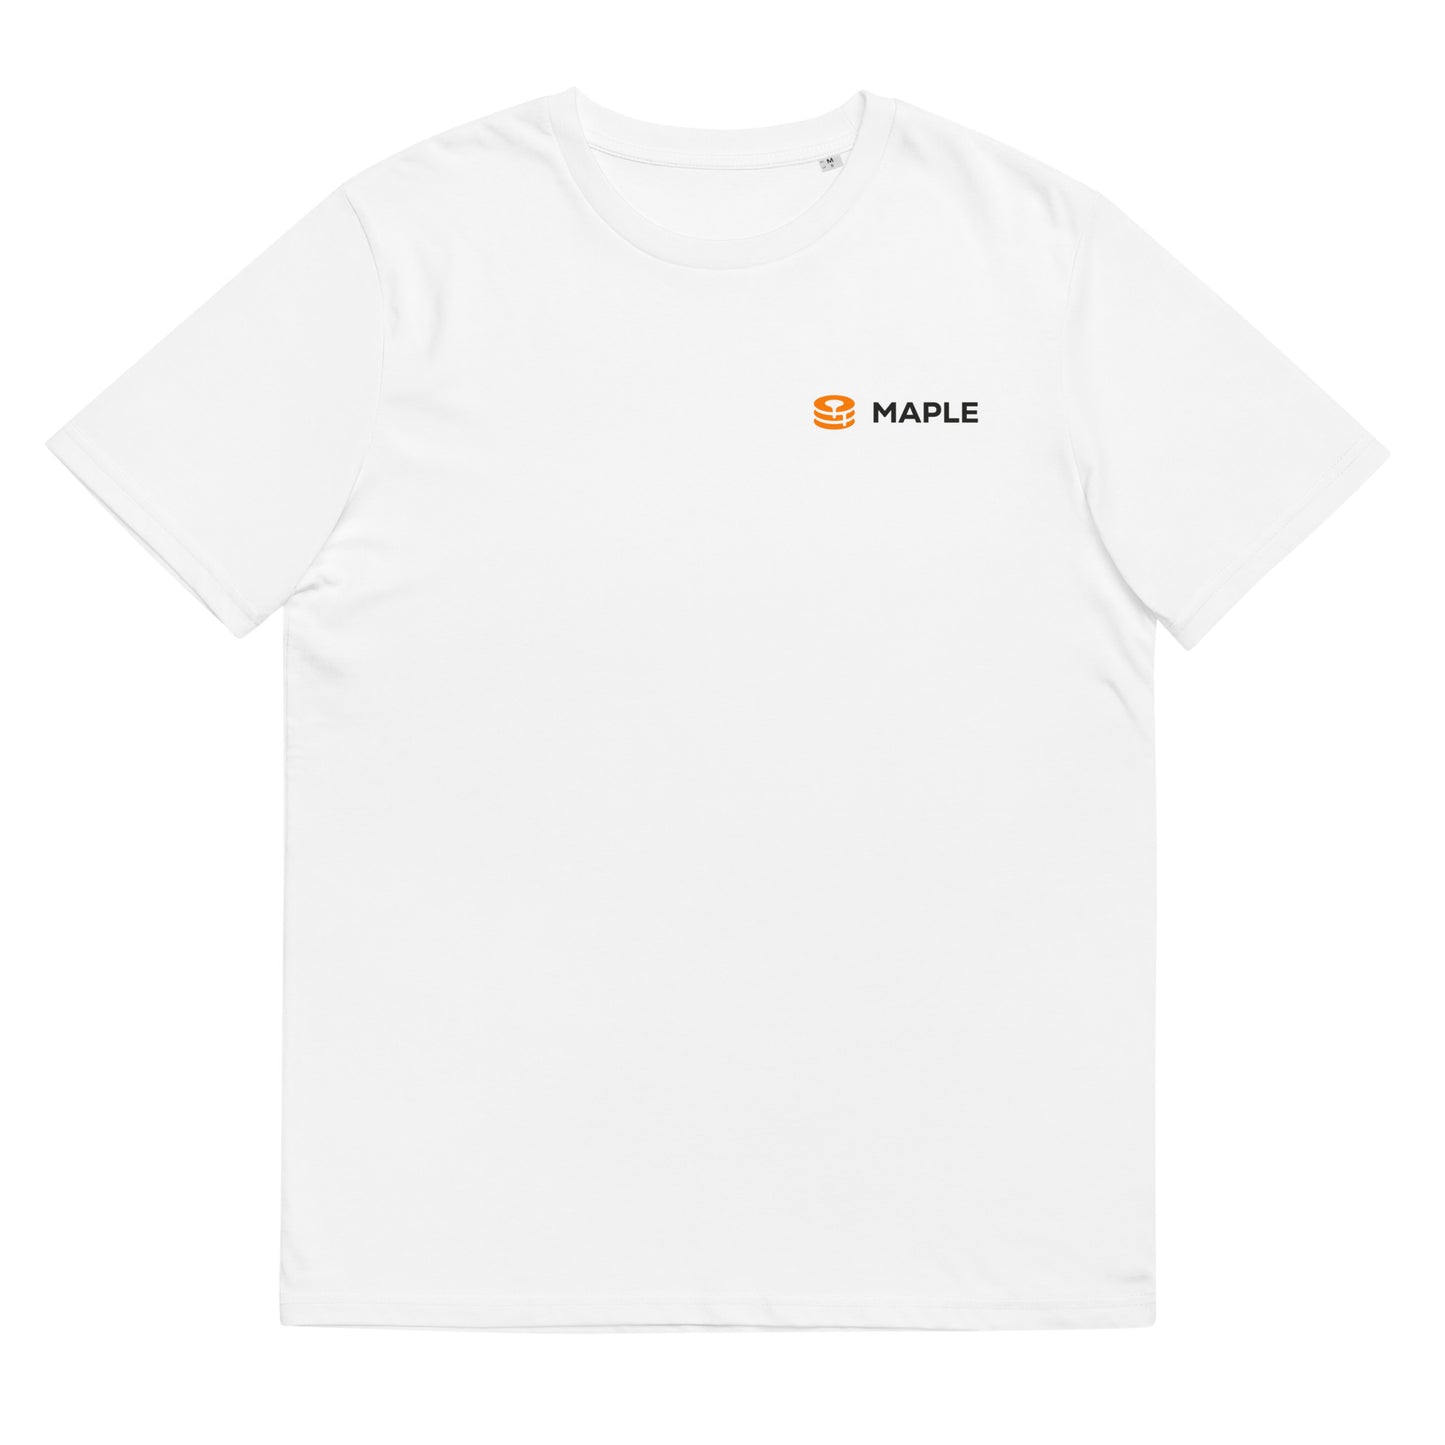 Maple T-shirt (Light)